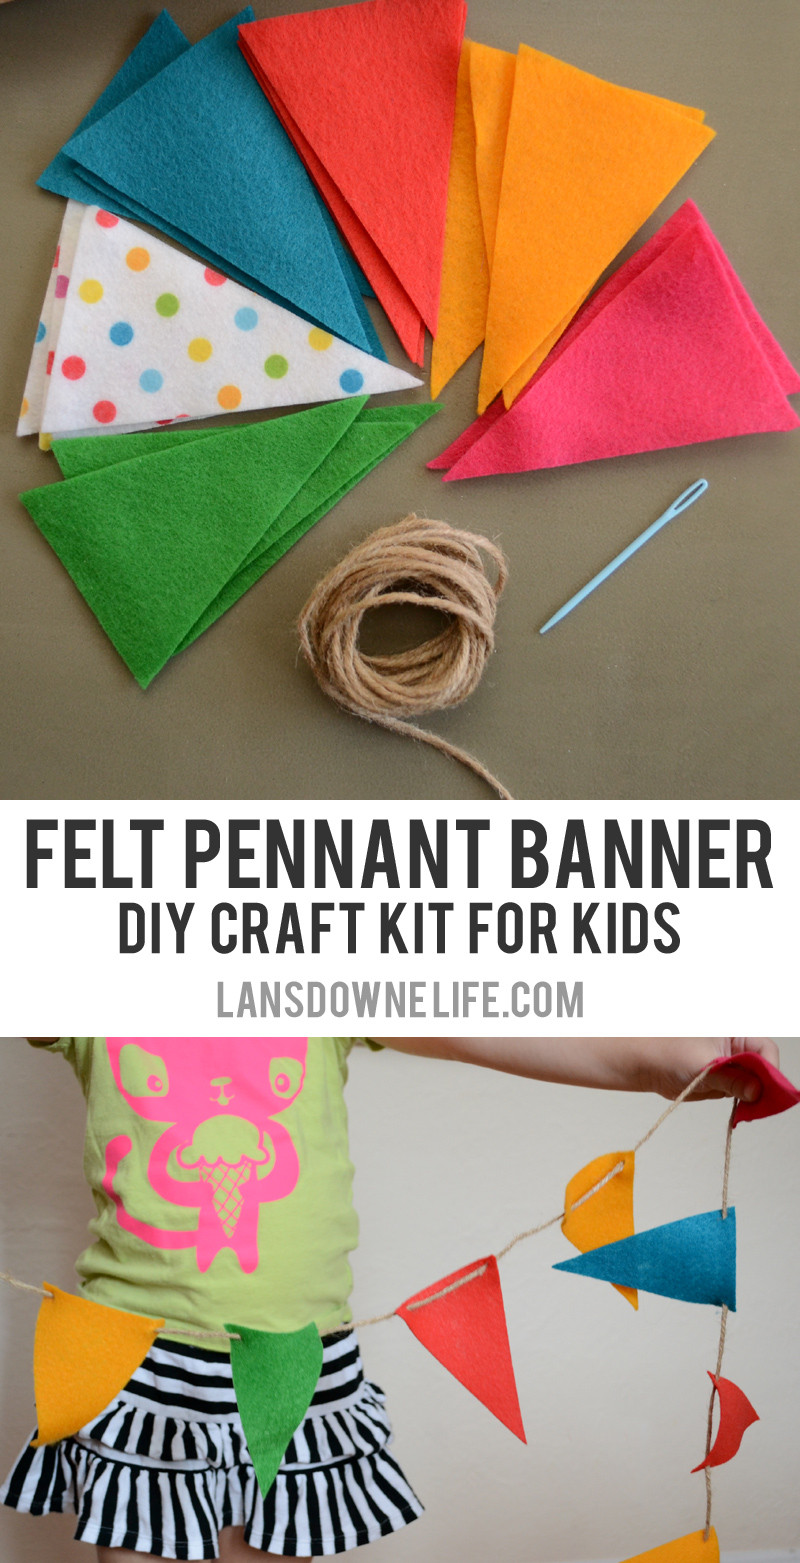 Diy Craft Kits For Kids
 Homemade Christmas Gifts for Kids